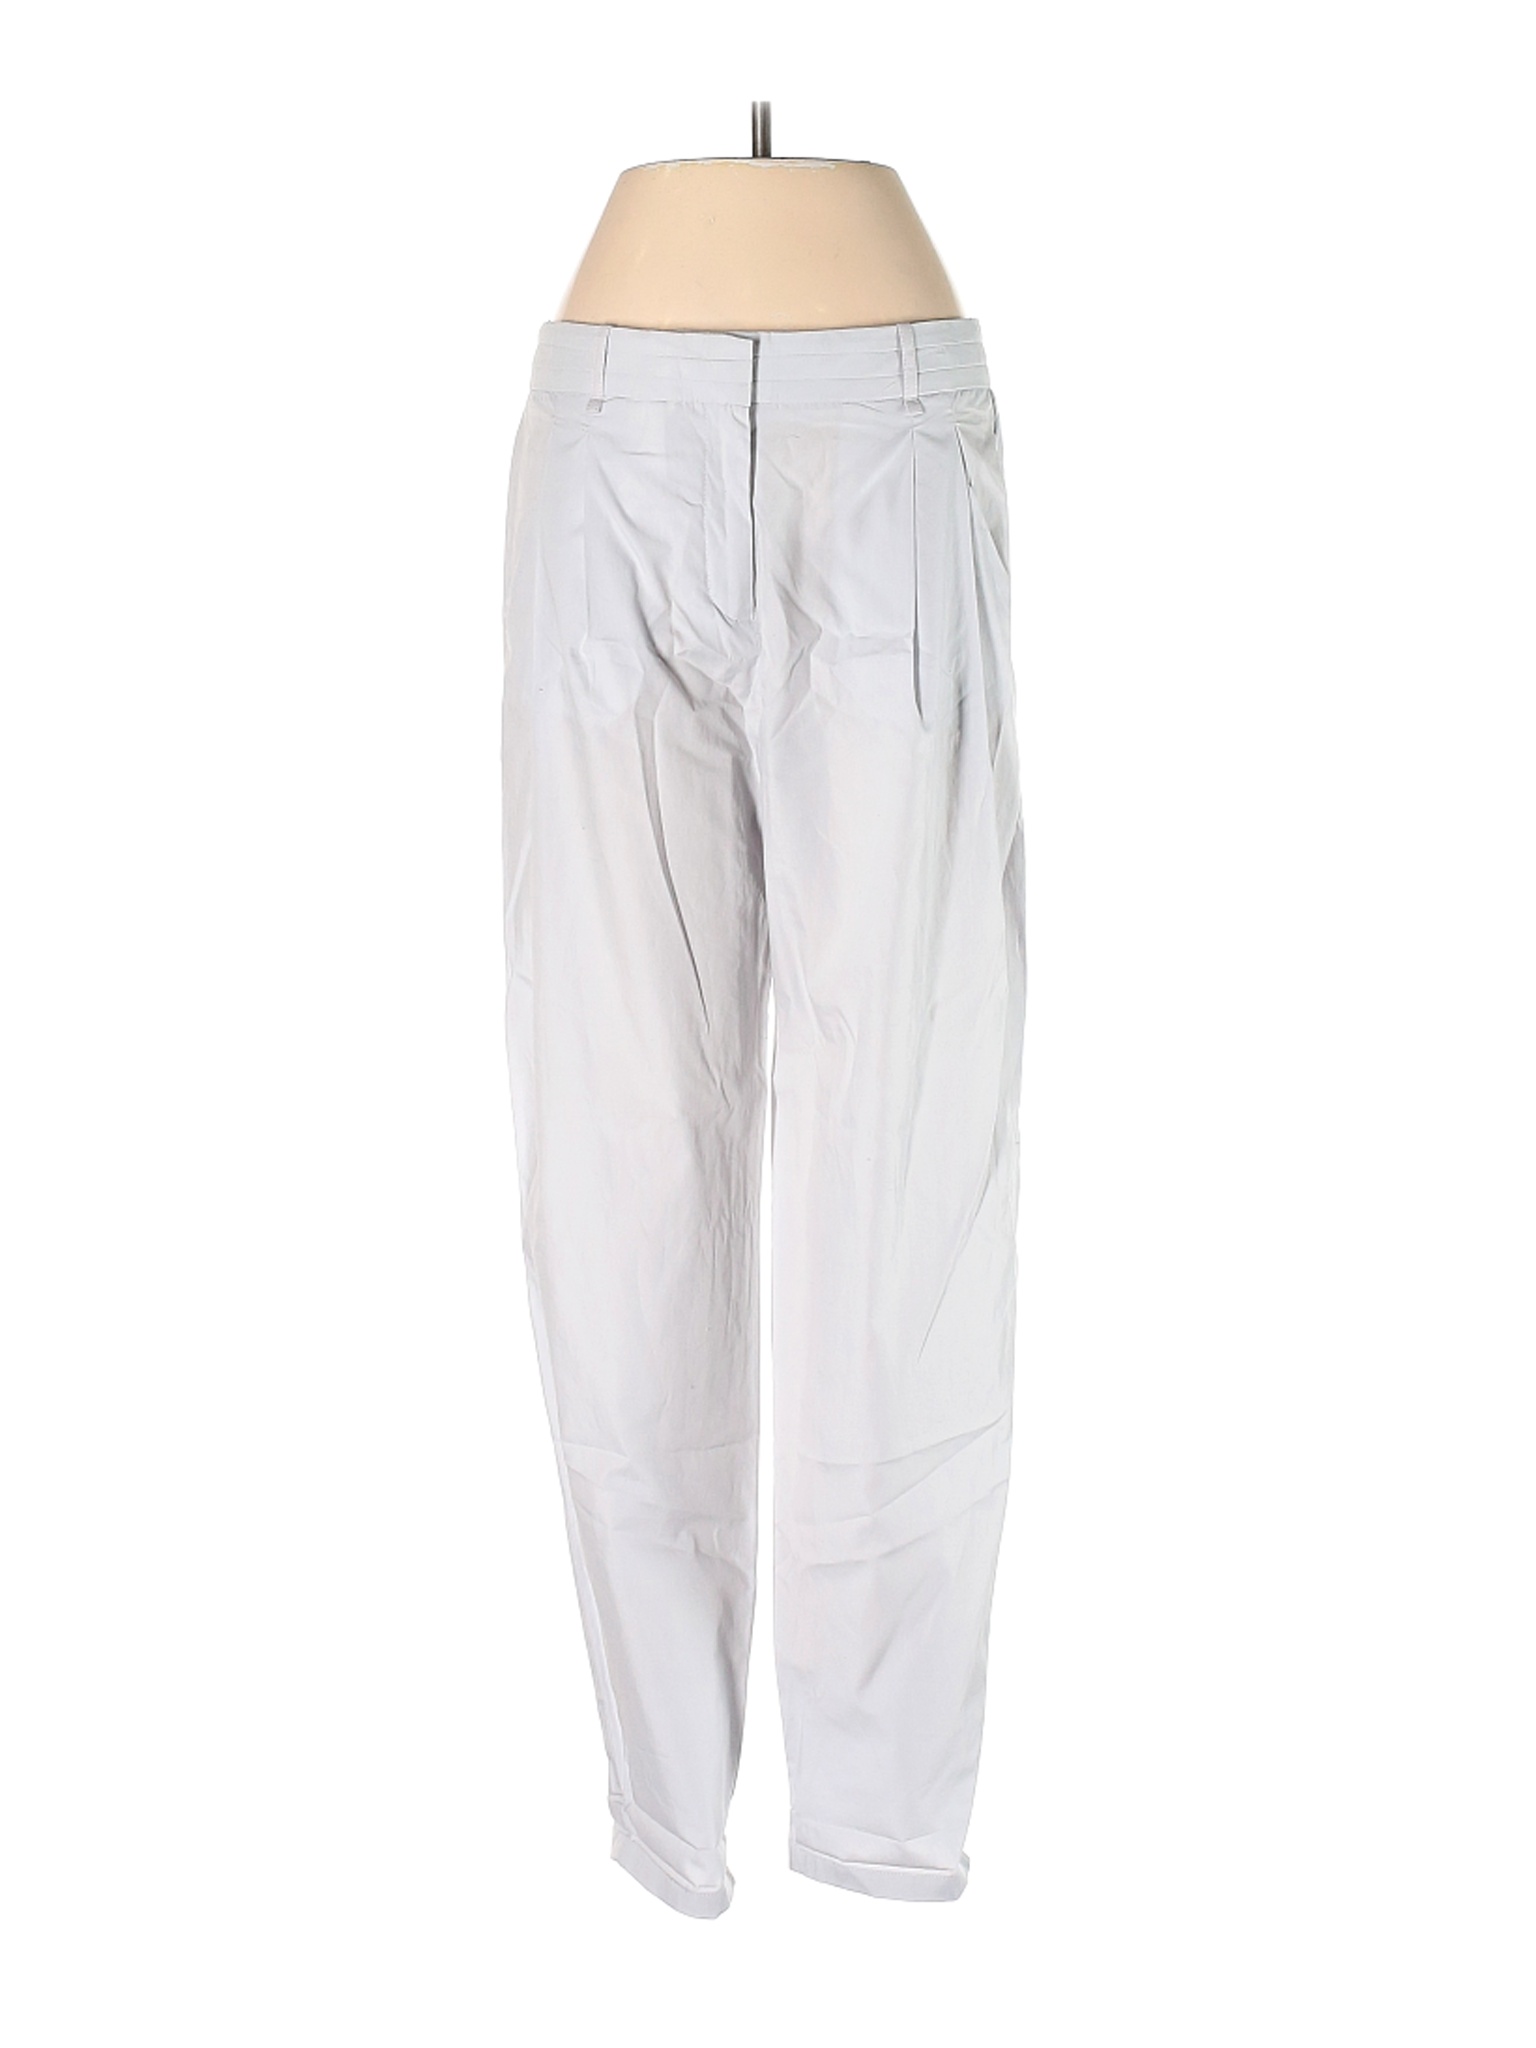 Zara Basic Women White Dress Pants S | eBay